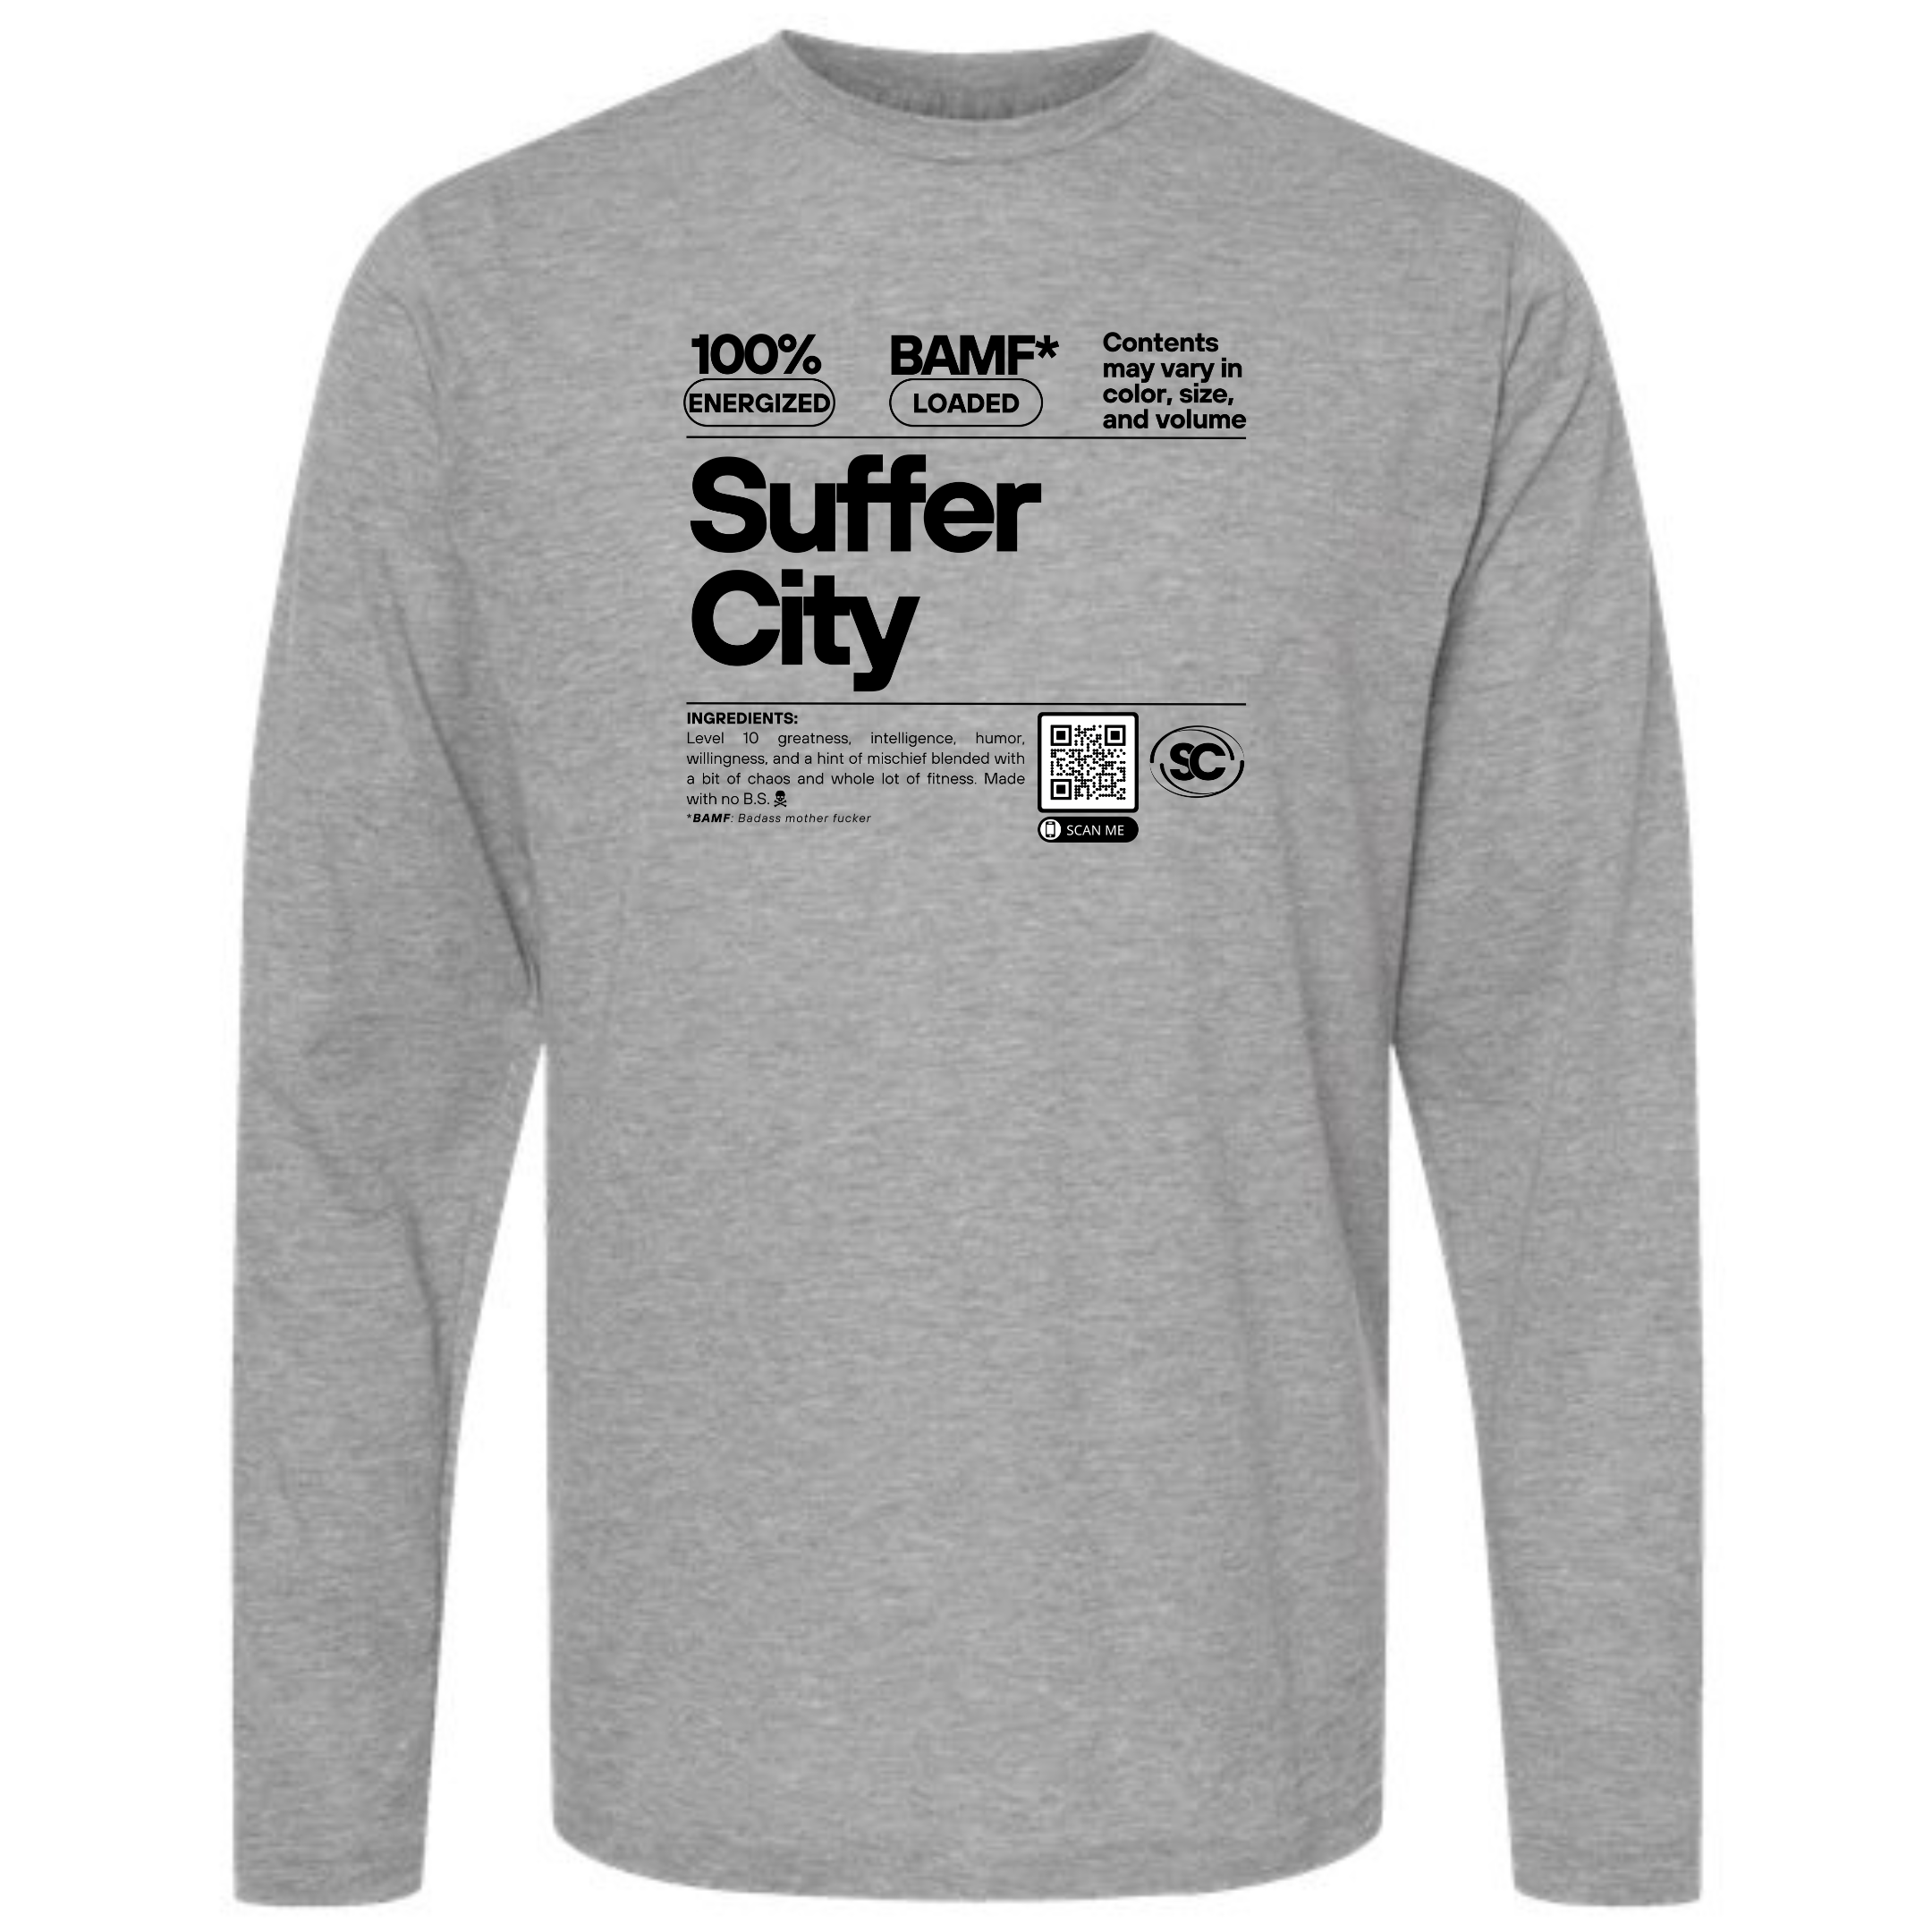 BAMF Suffer City “Warmer" Options